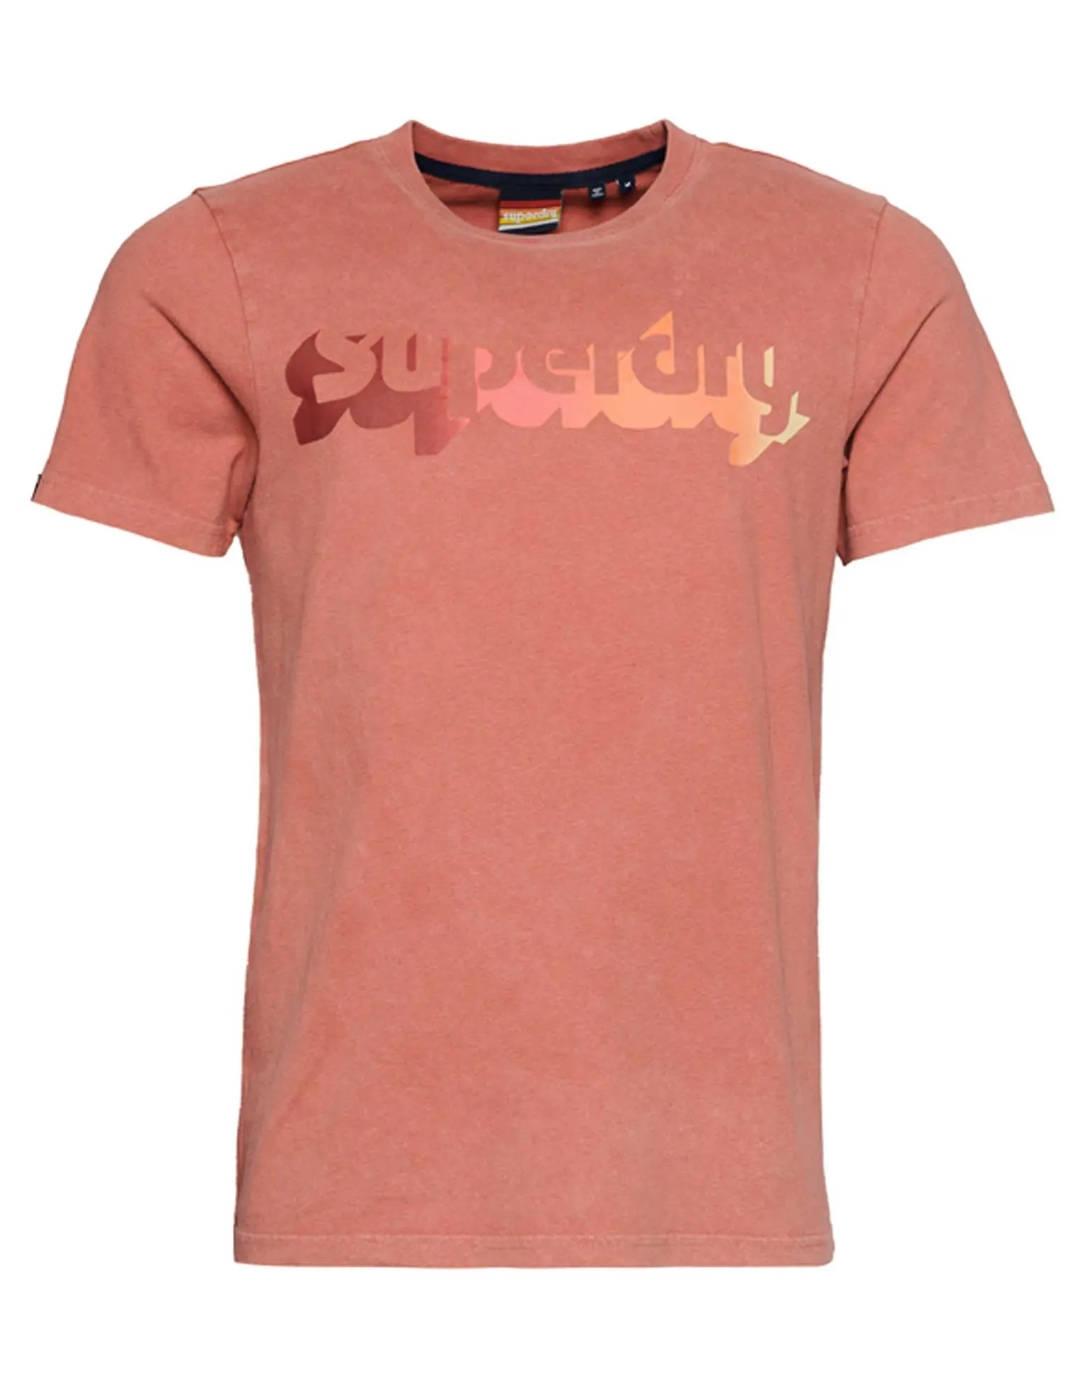 Camiseta Superdry Vintage rosa manga corta para hombre